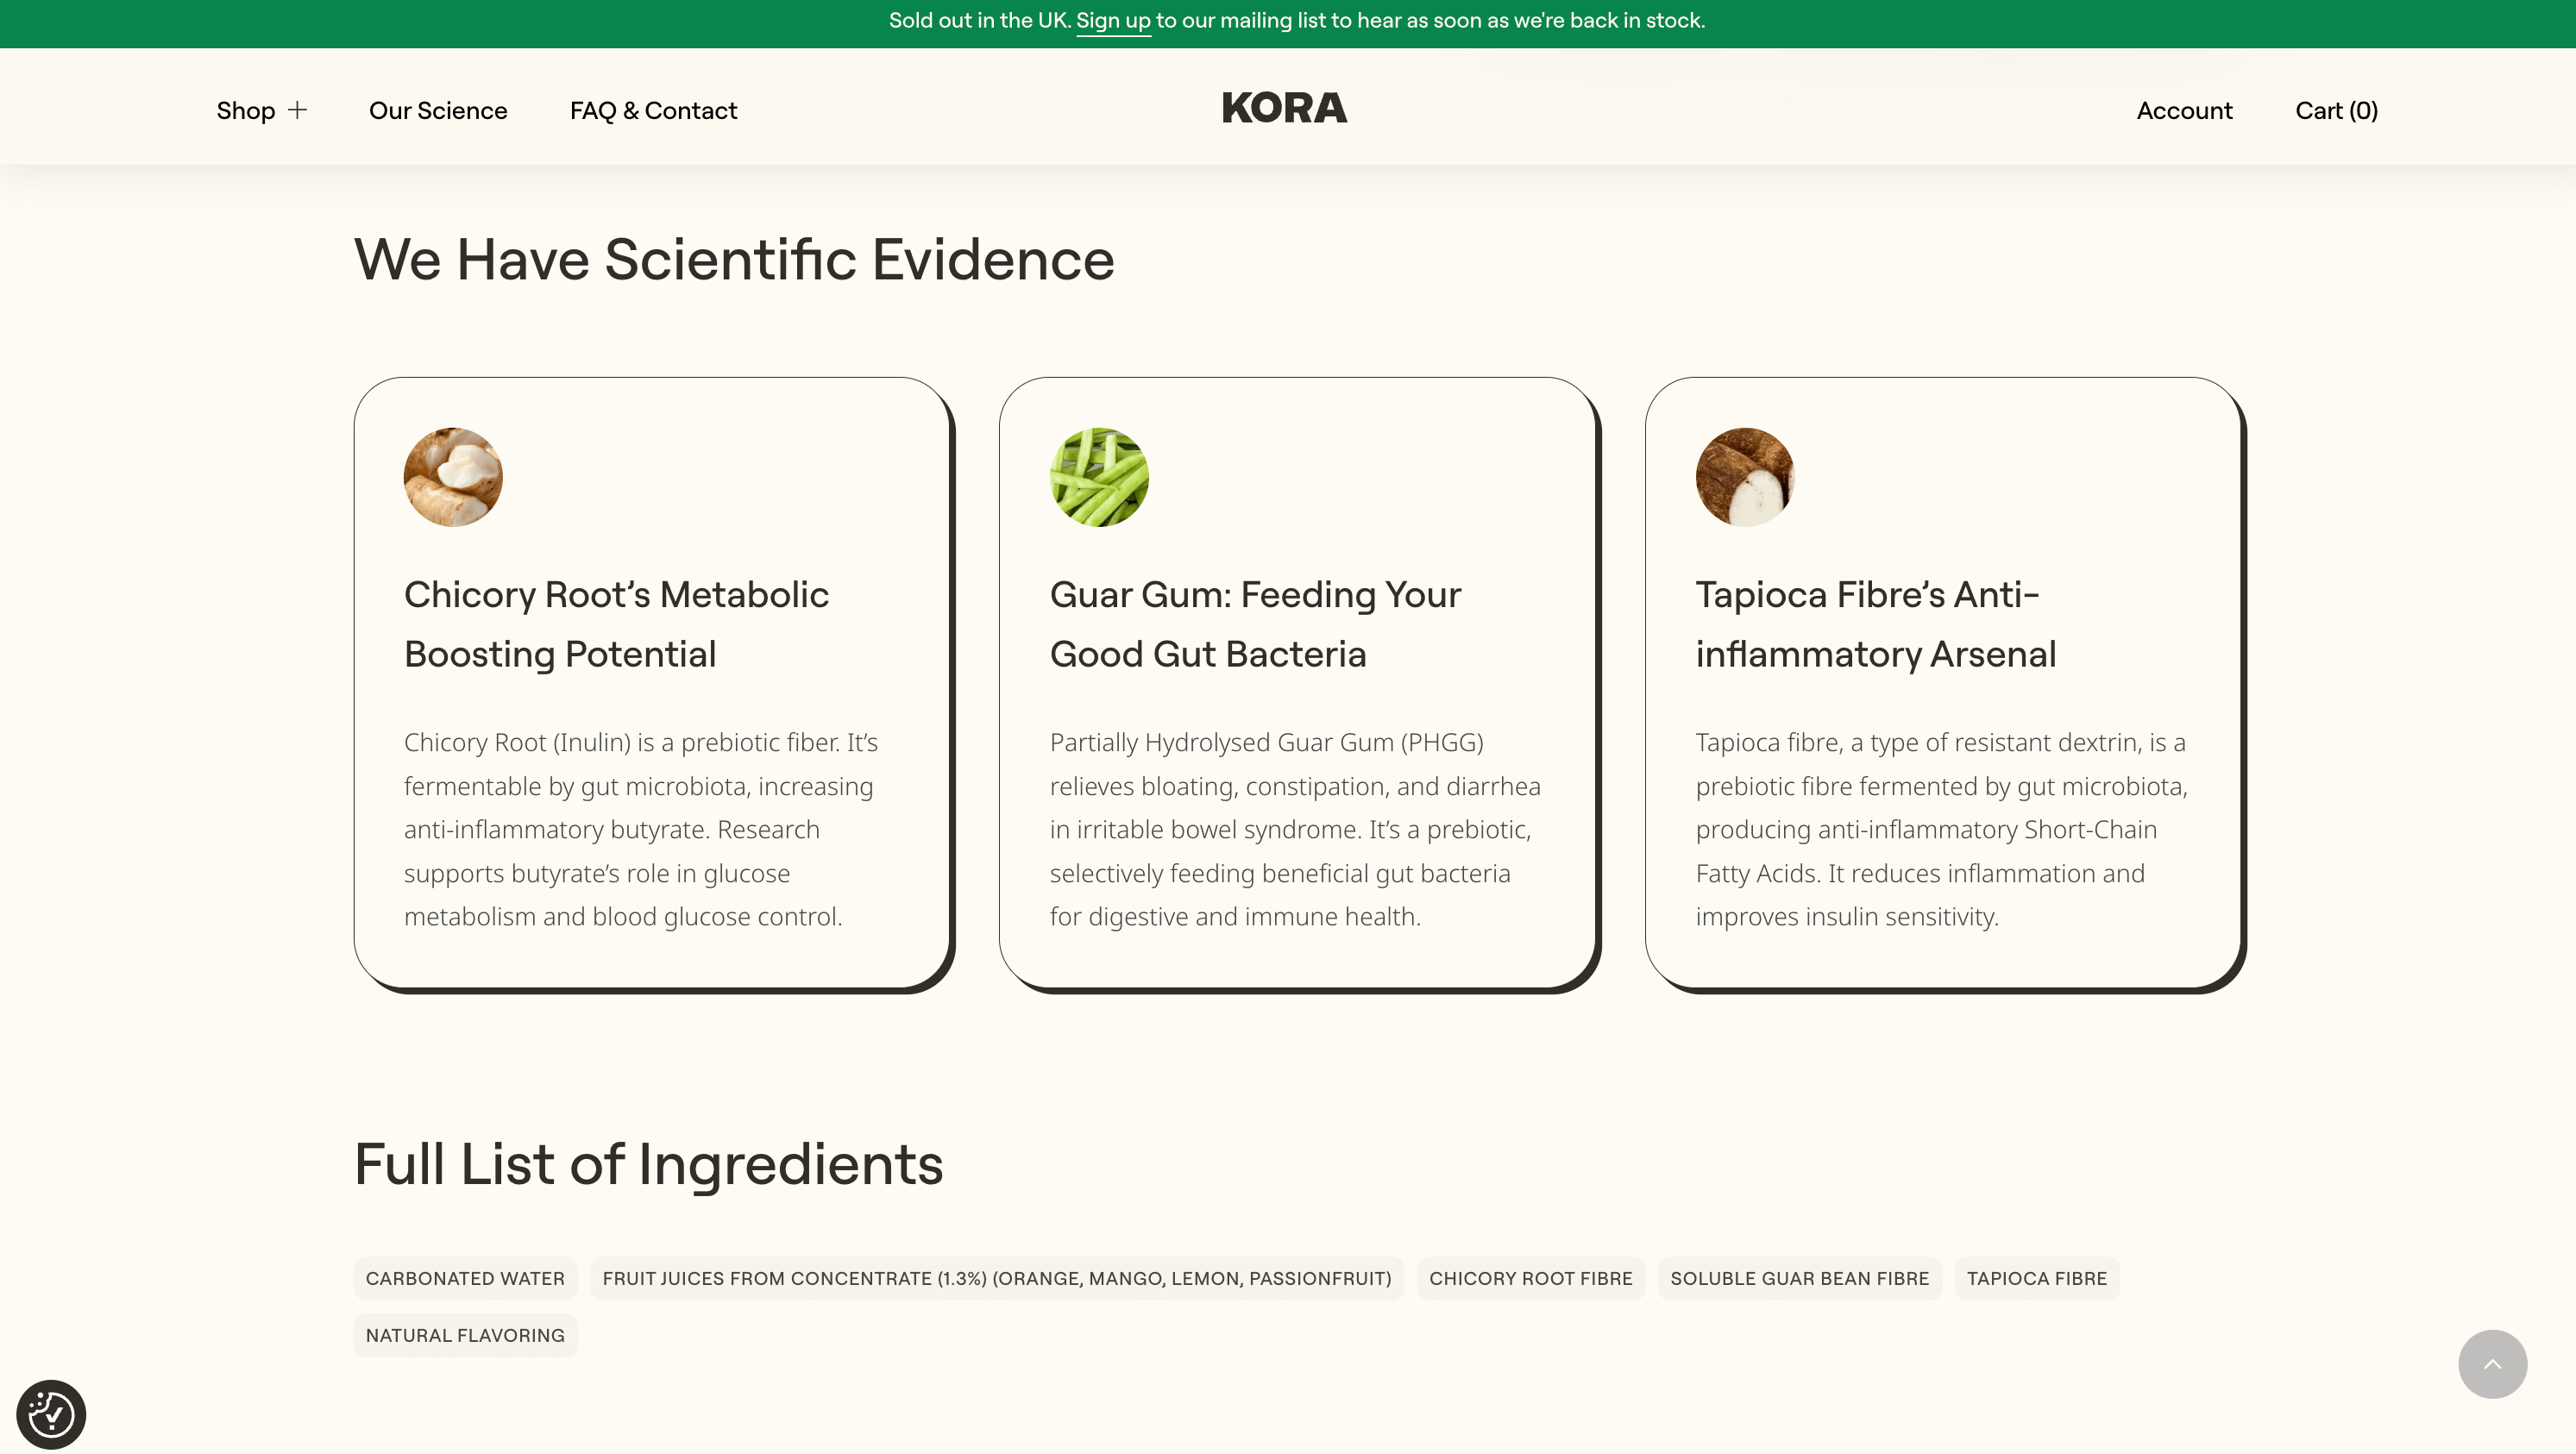 Scientific evidence + ingredients